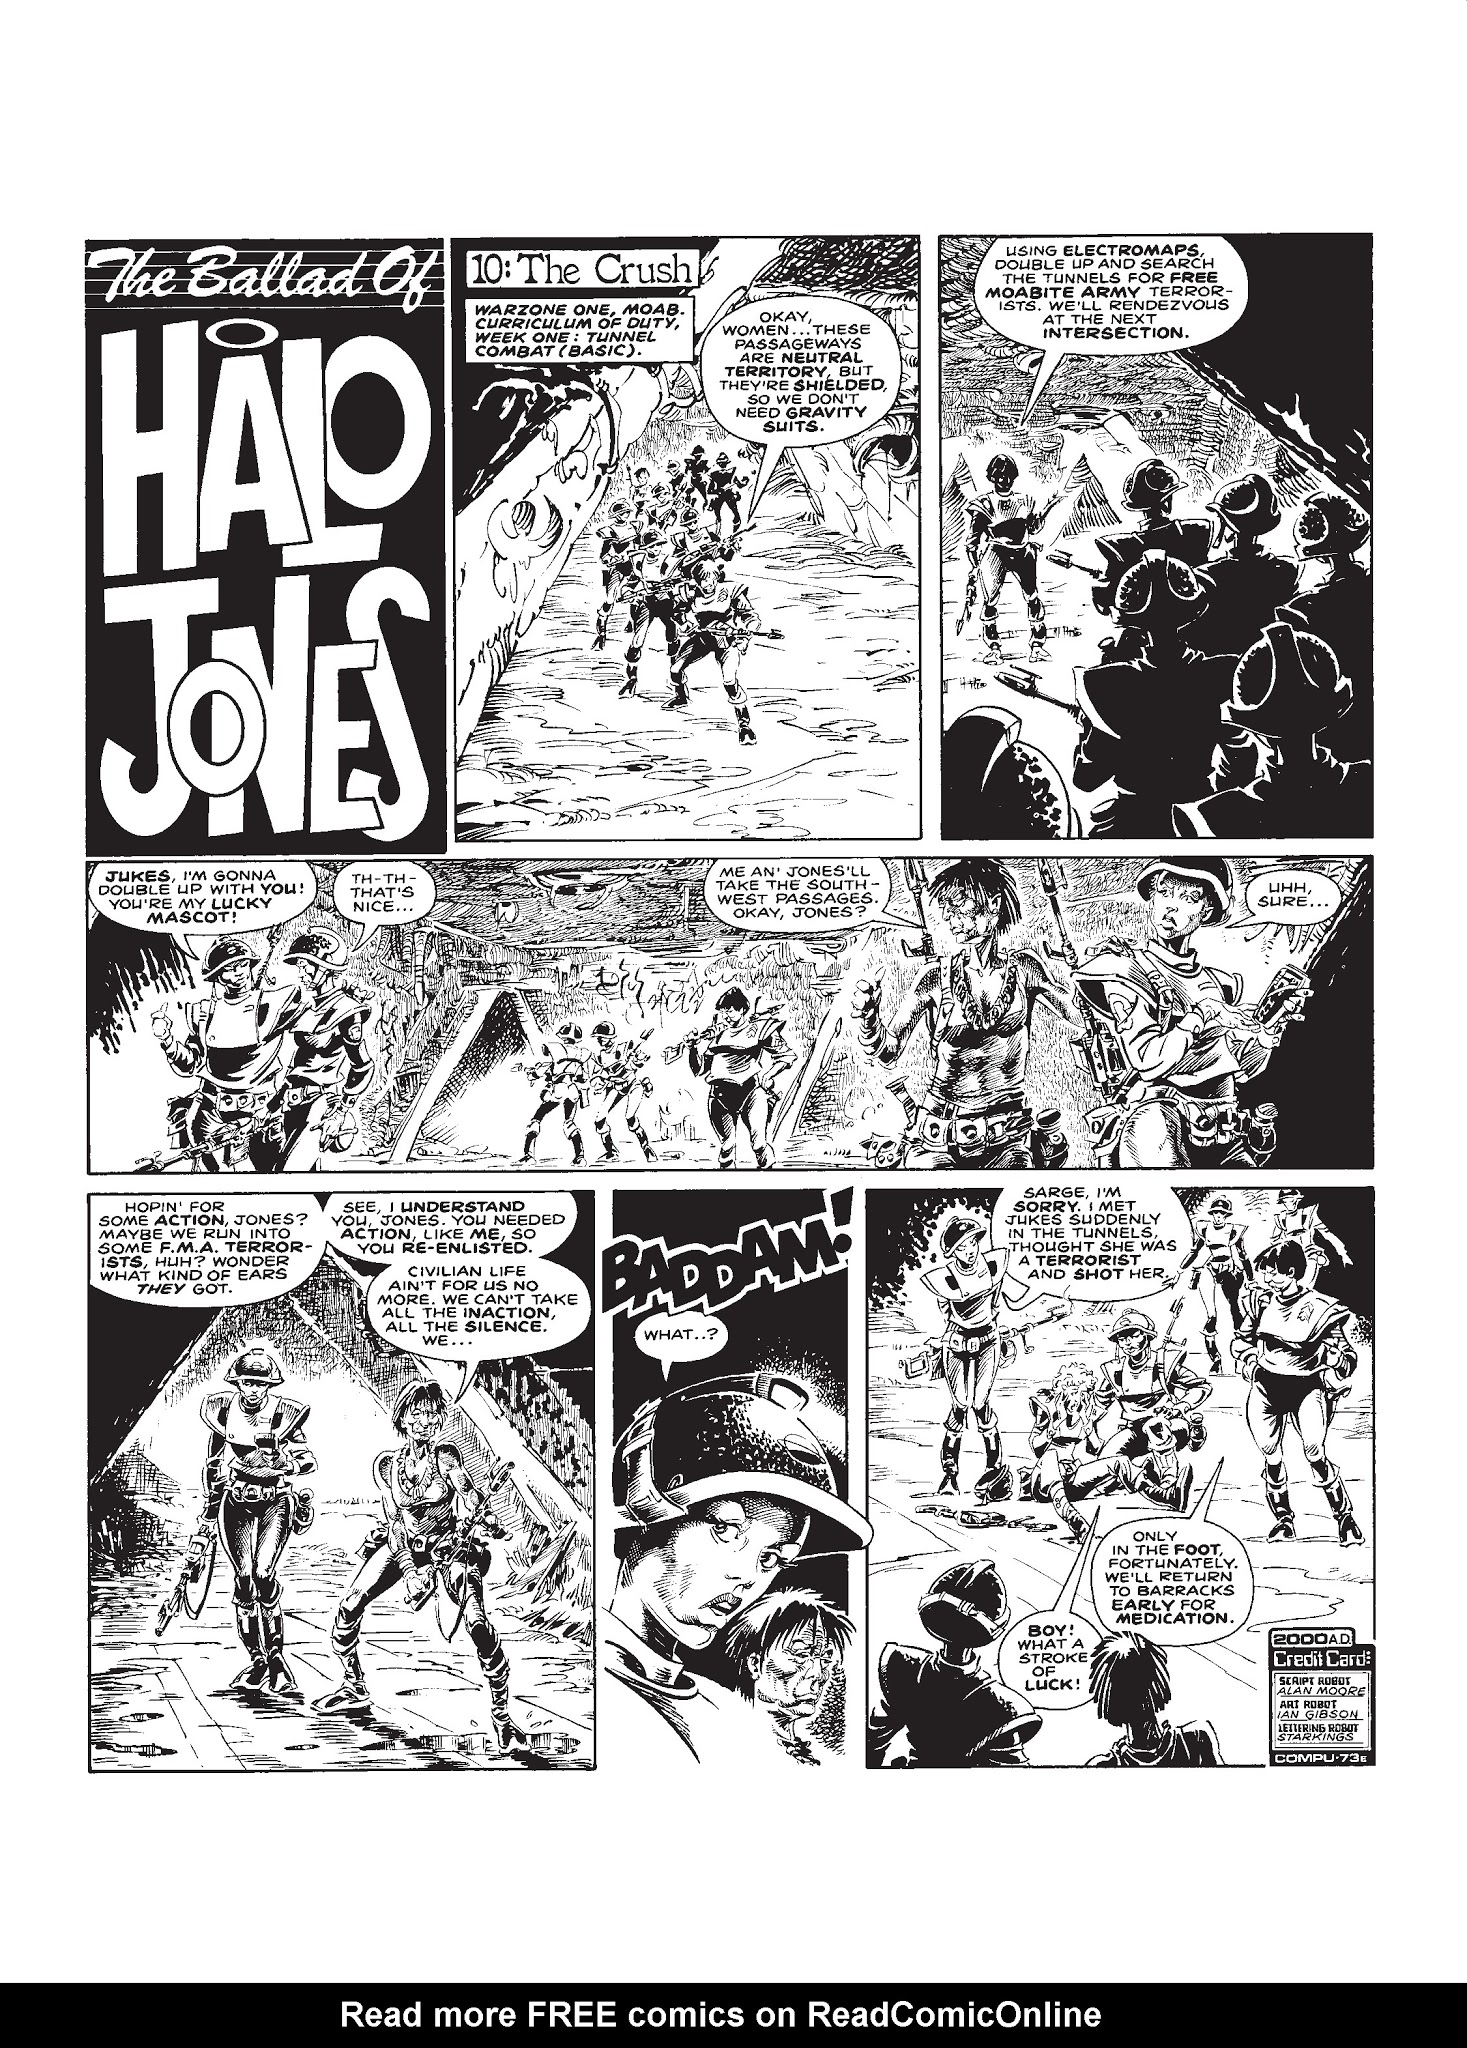 Read online The Ballad of Halo Jones comic -  Issue # TPB - 164